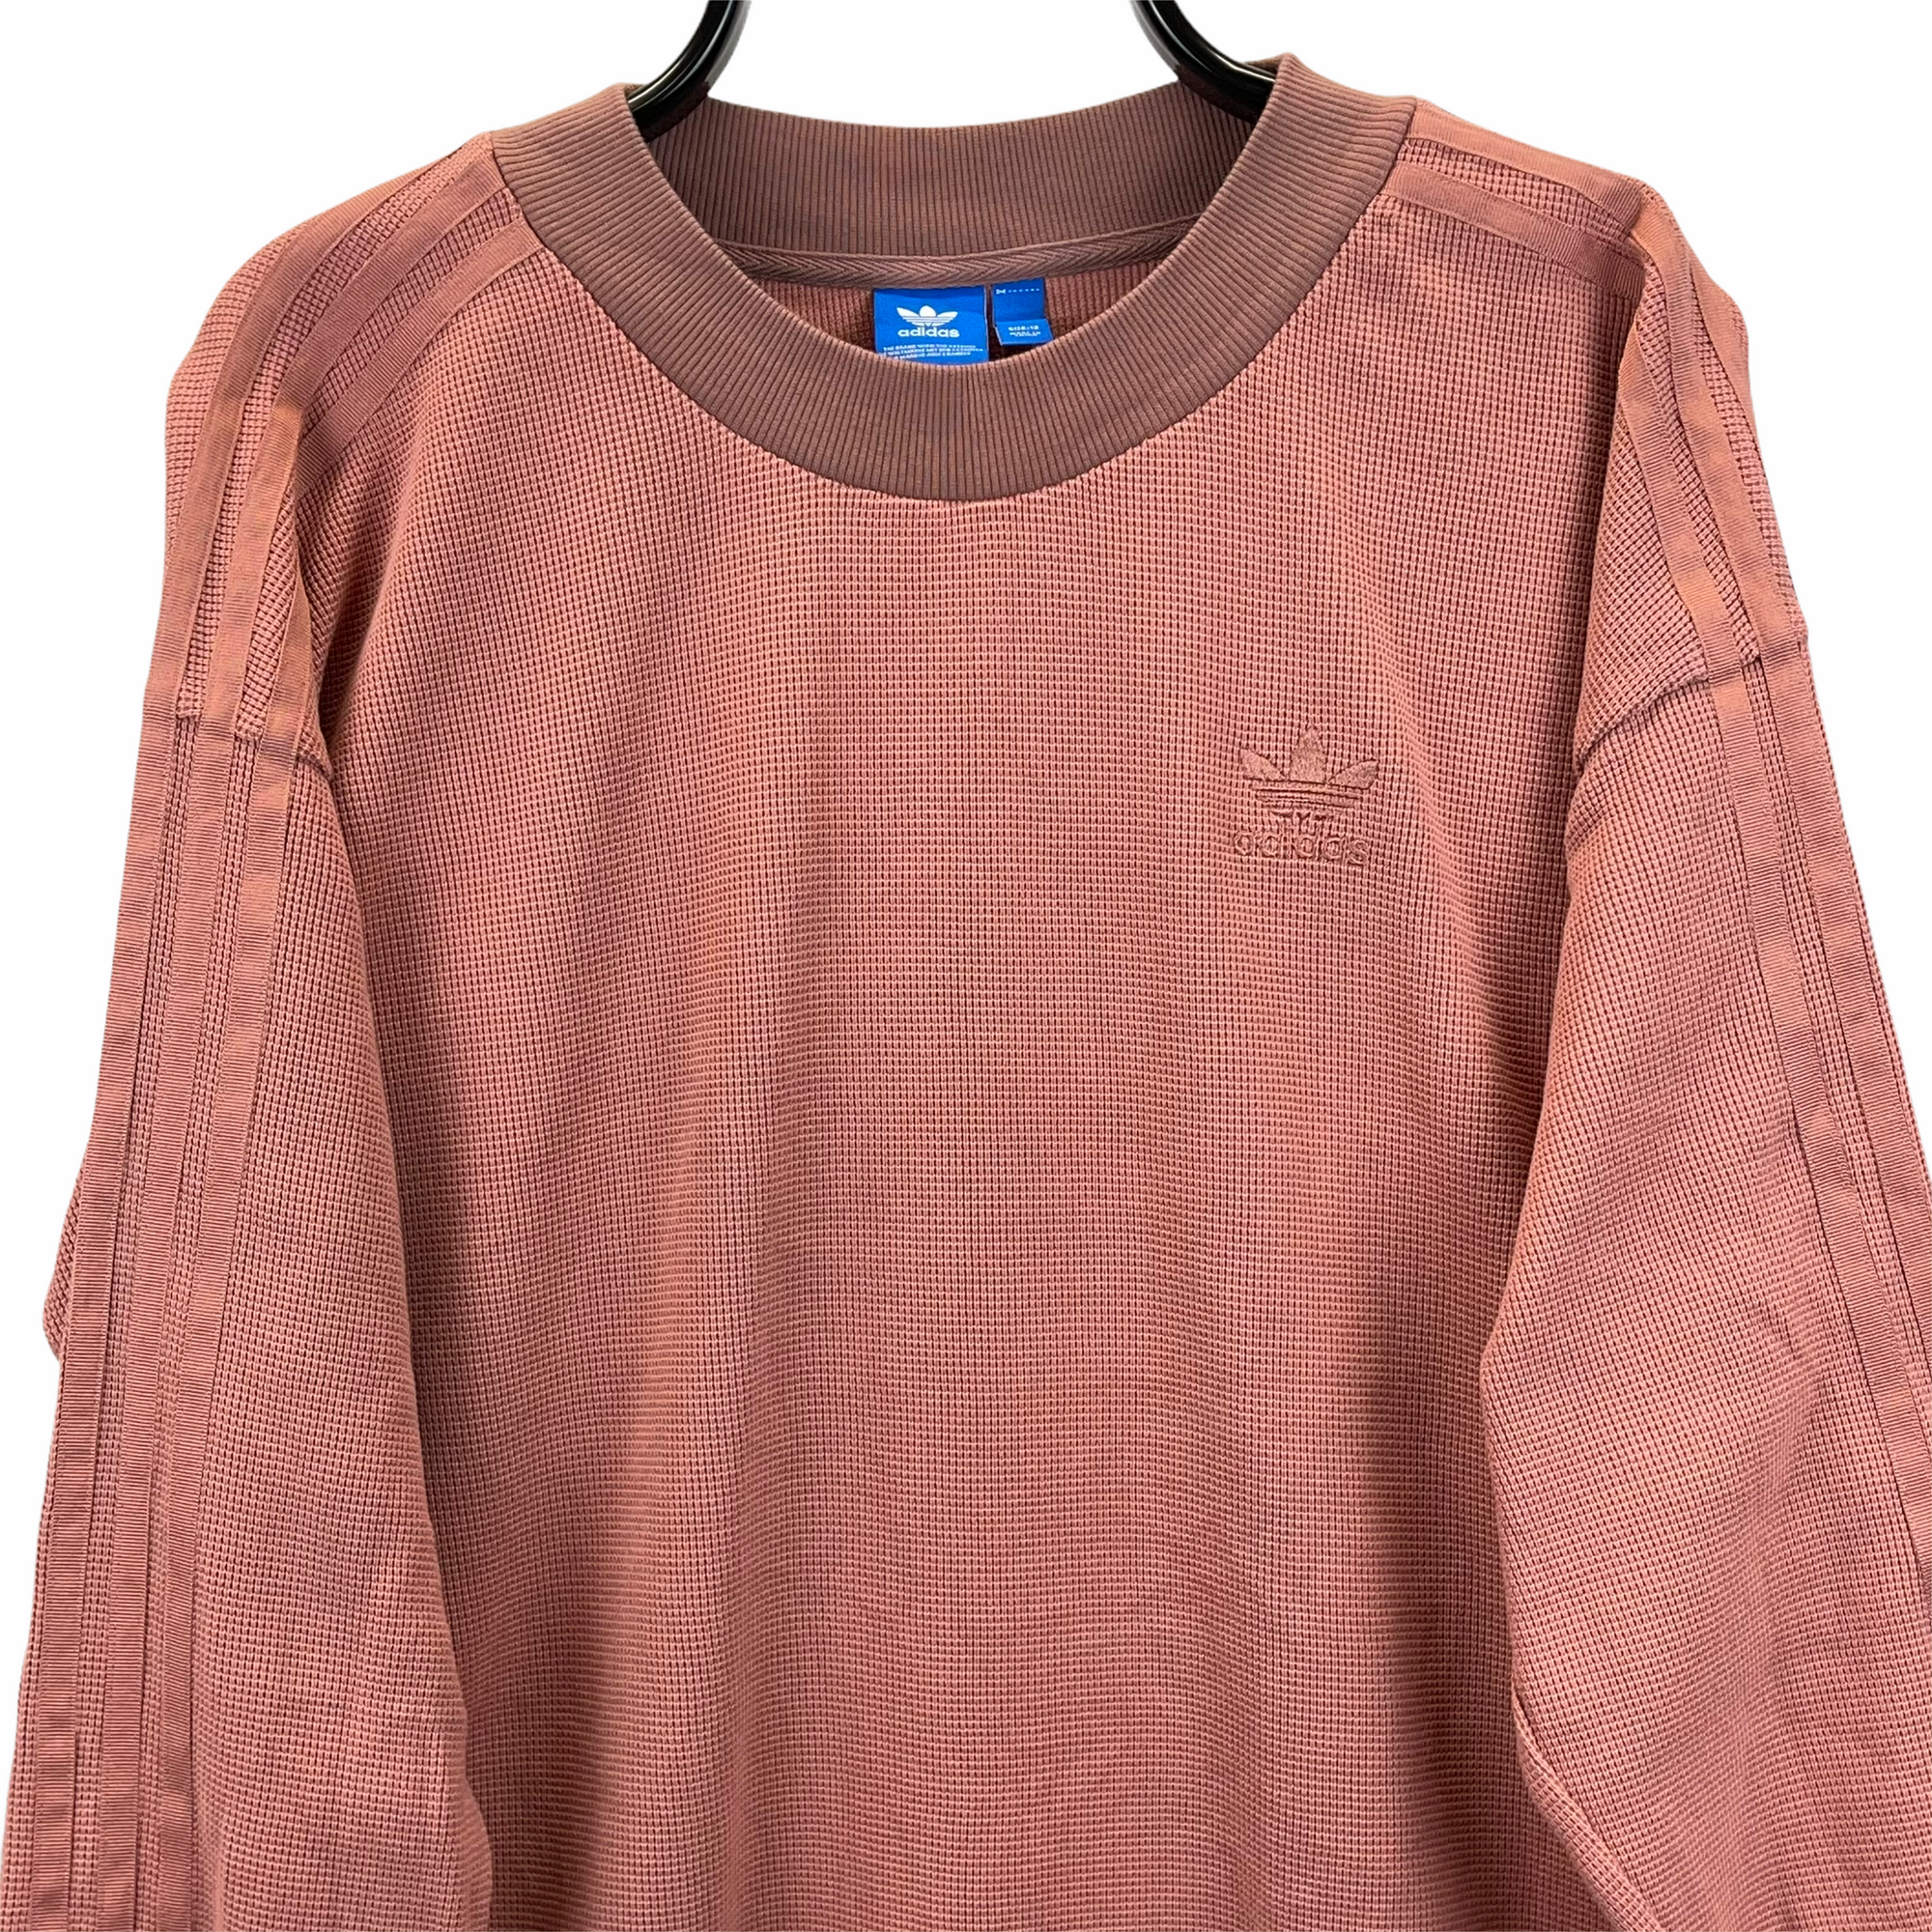 Adidas Embroidered Small Logo Sweatshirt in Deep Peach/Brown - Men's Medium/Women's Large